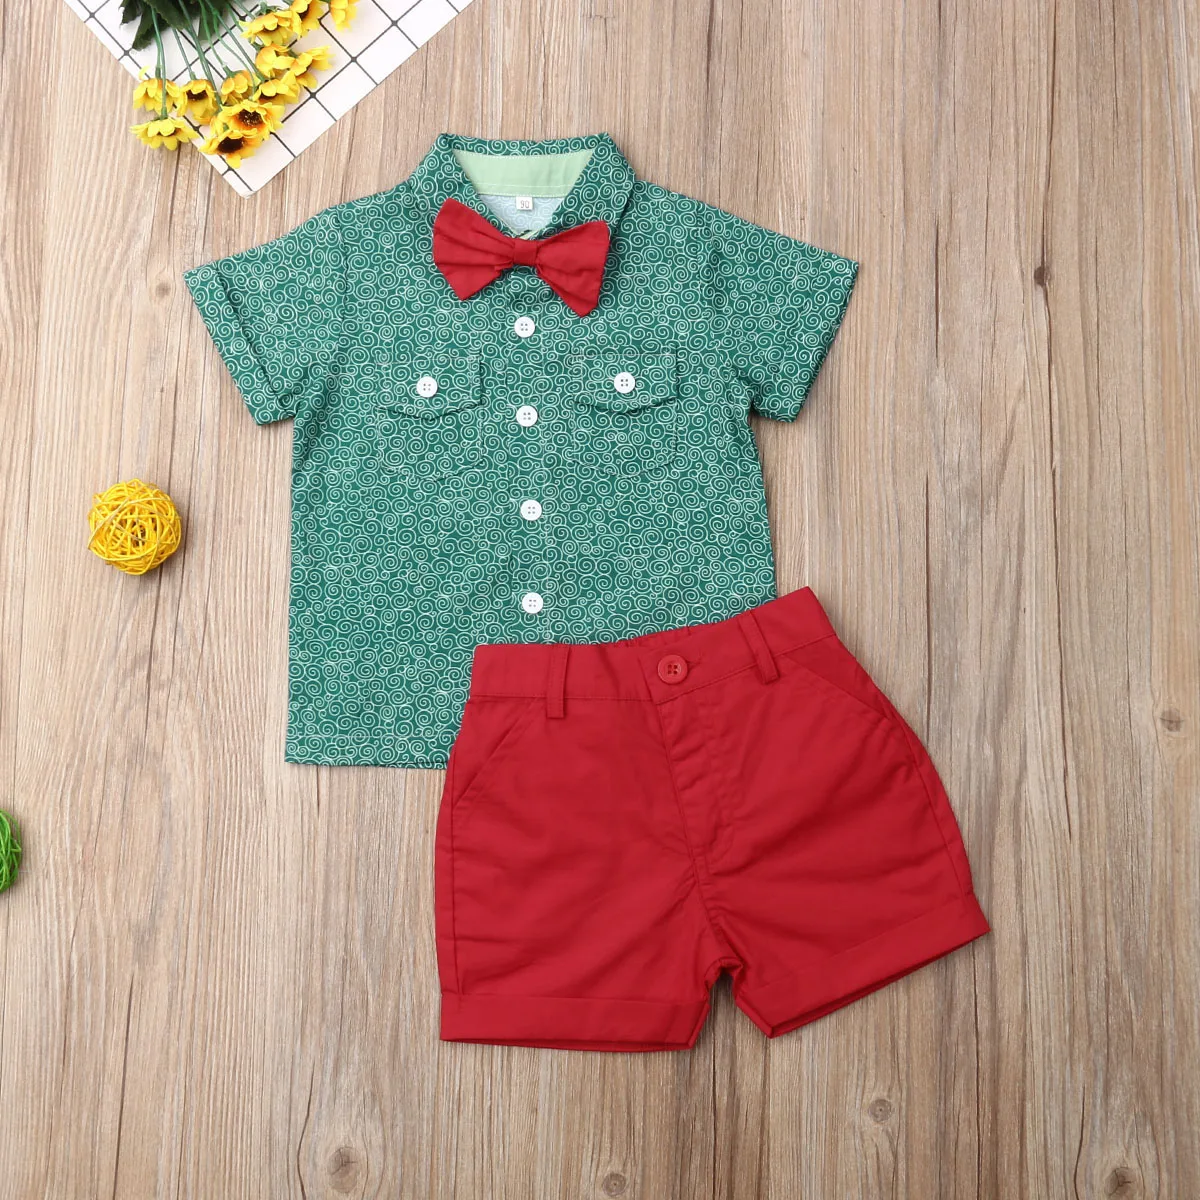 Pudcoco Toddler Baby Boy Clothes Print Shirt Tops Short Pants 2Pcs Outifts Gentleman Formal Clothes